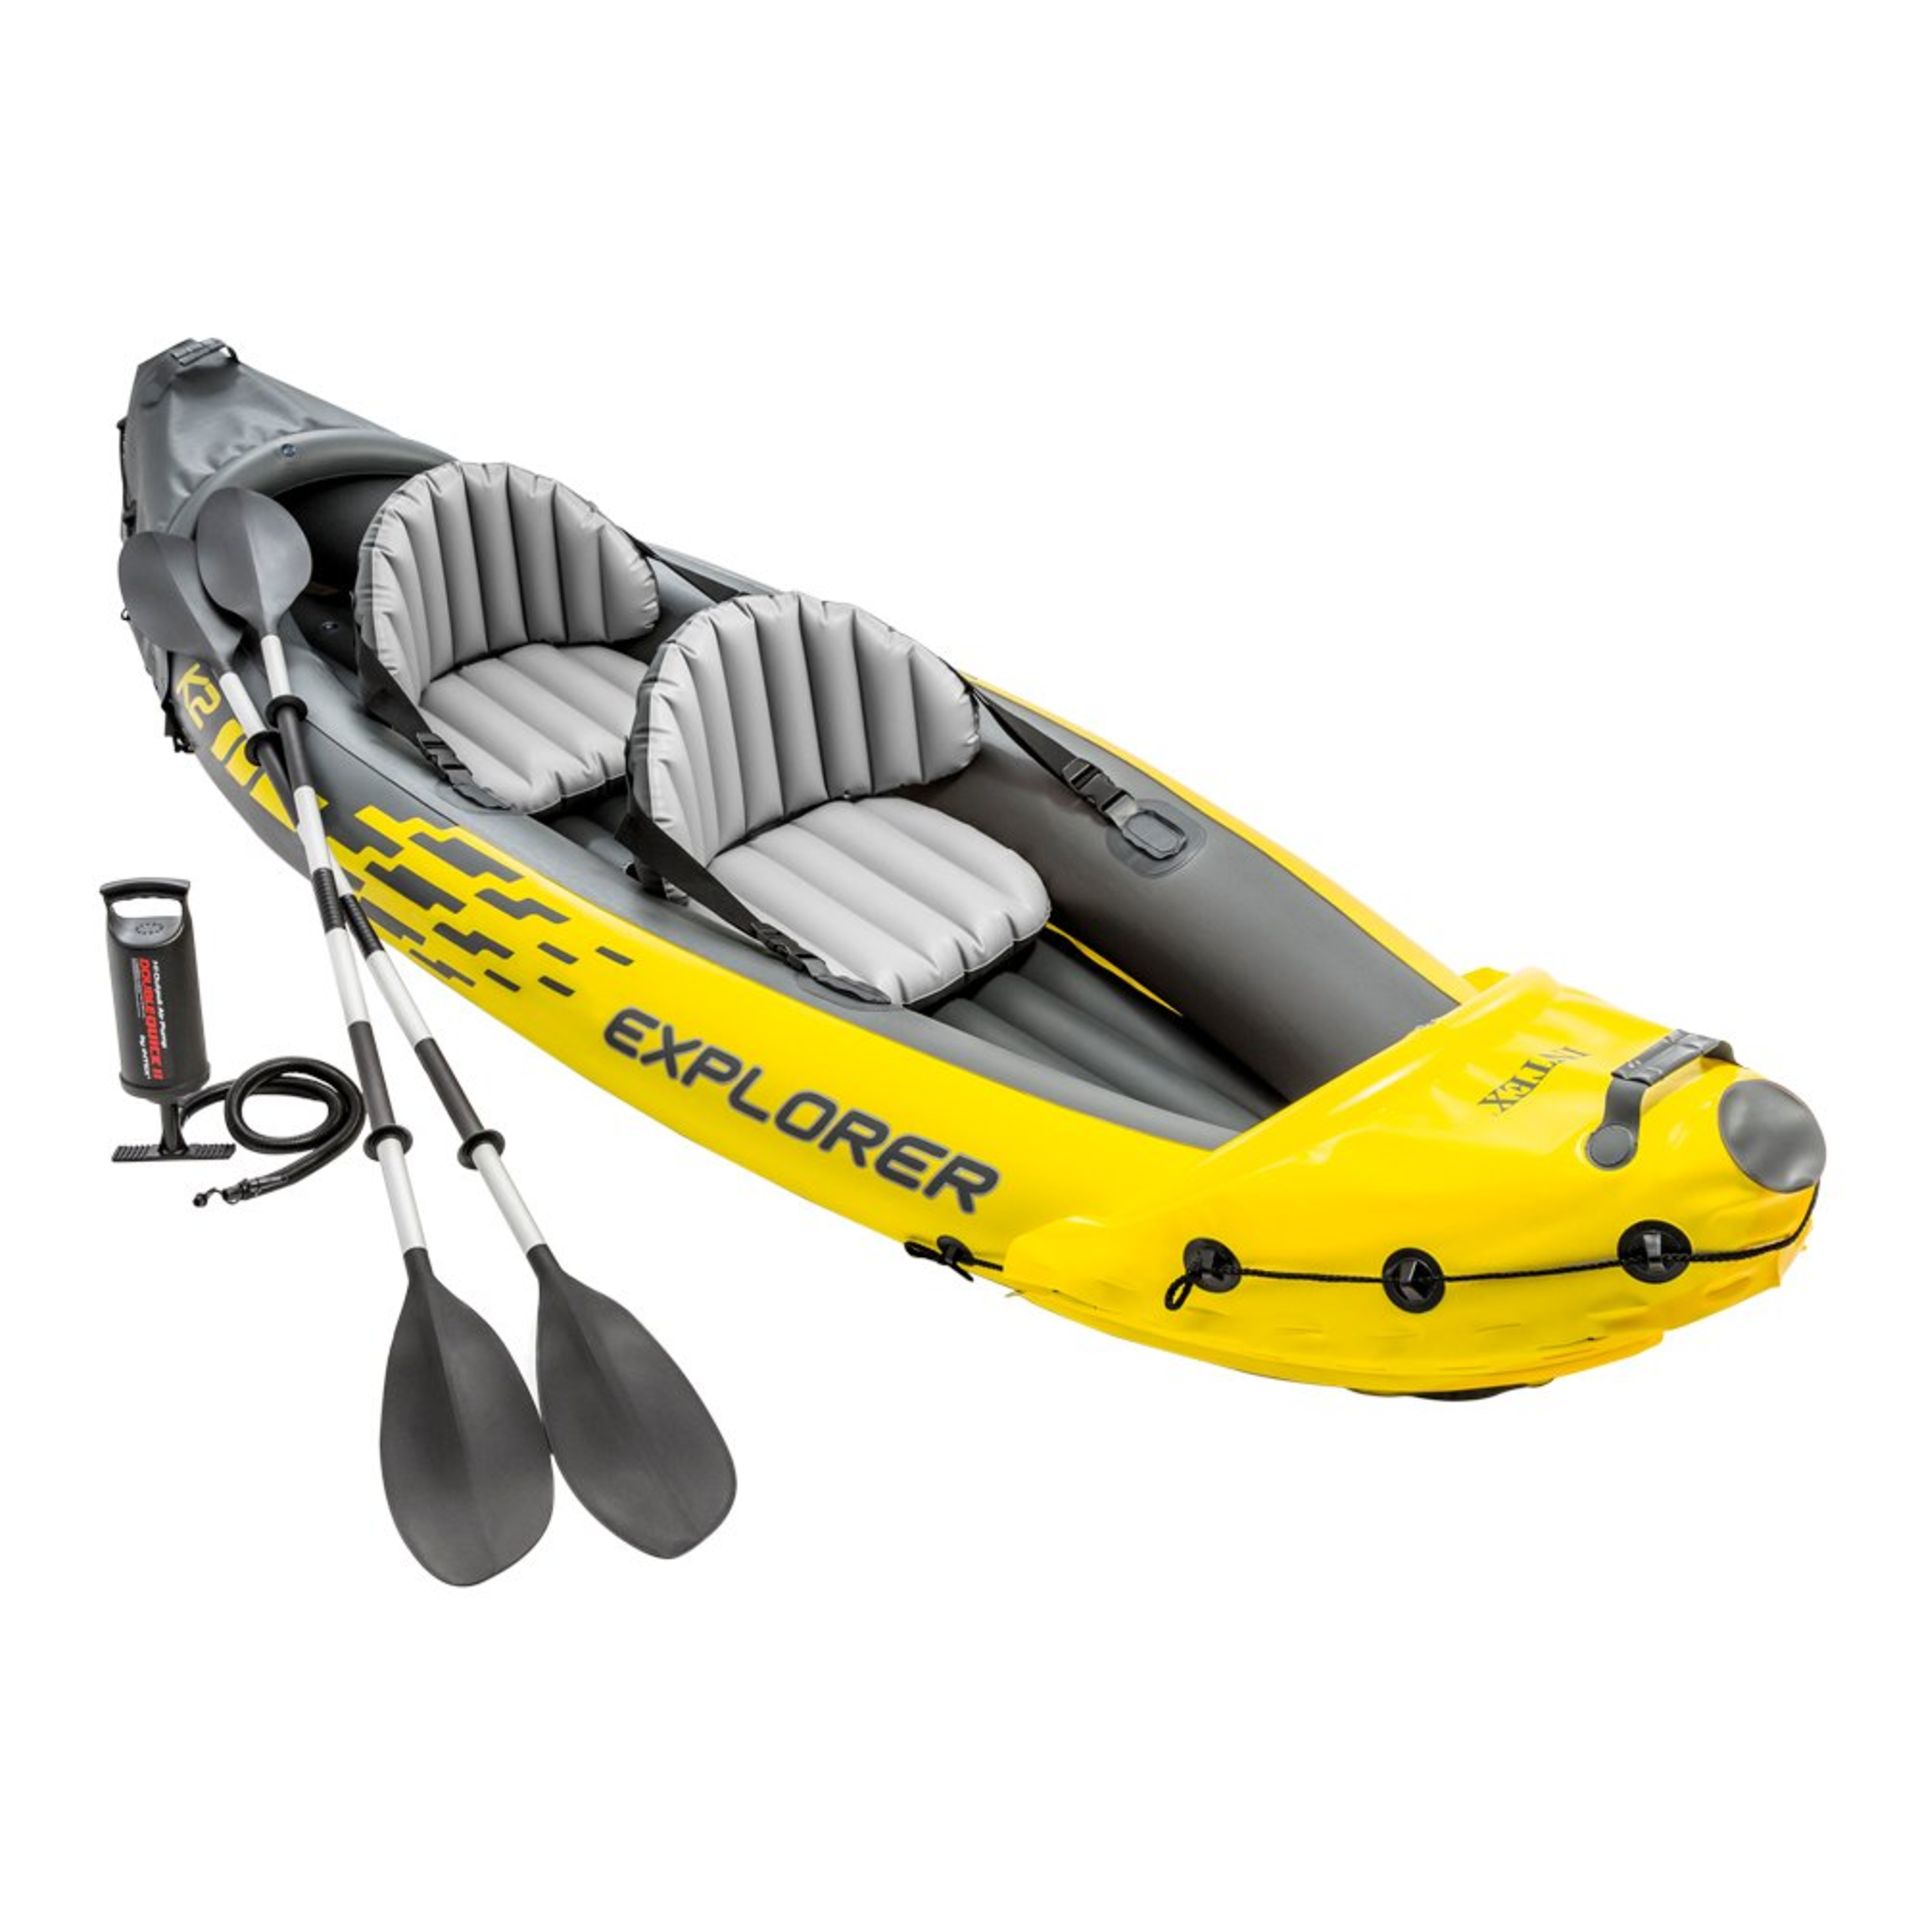 Intex Explorer K2 Kayak, 2-Person Inflatable Kayak Set RRP £169.99.